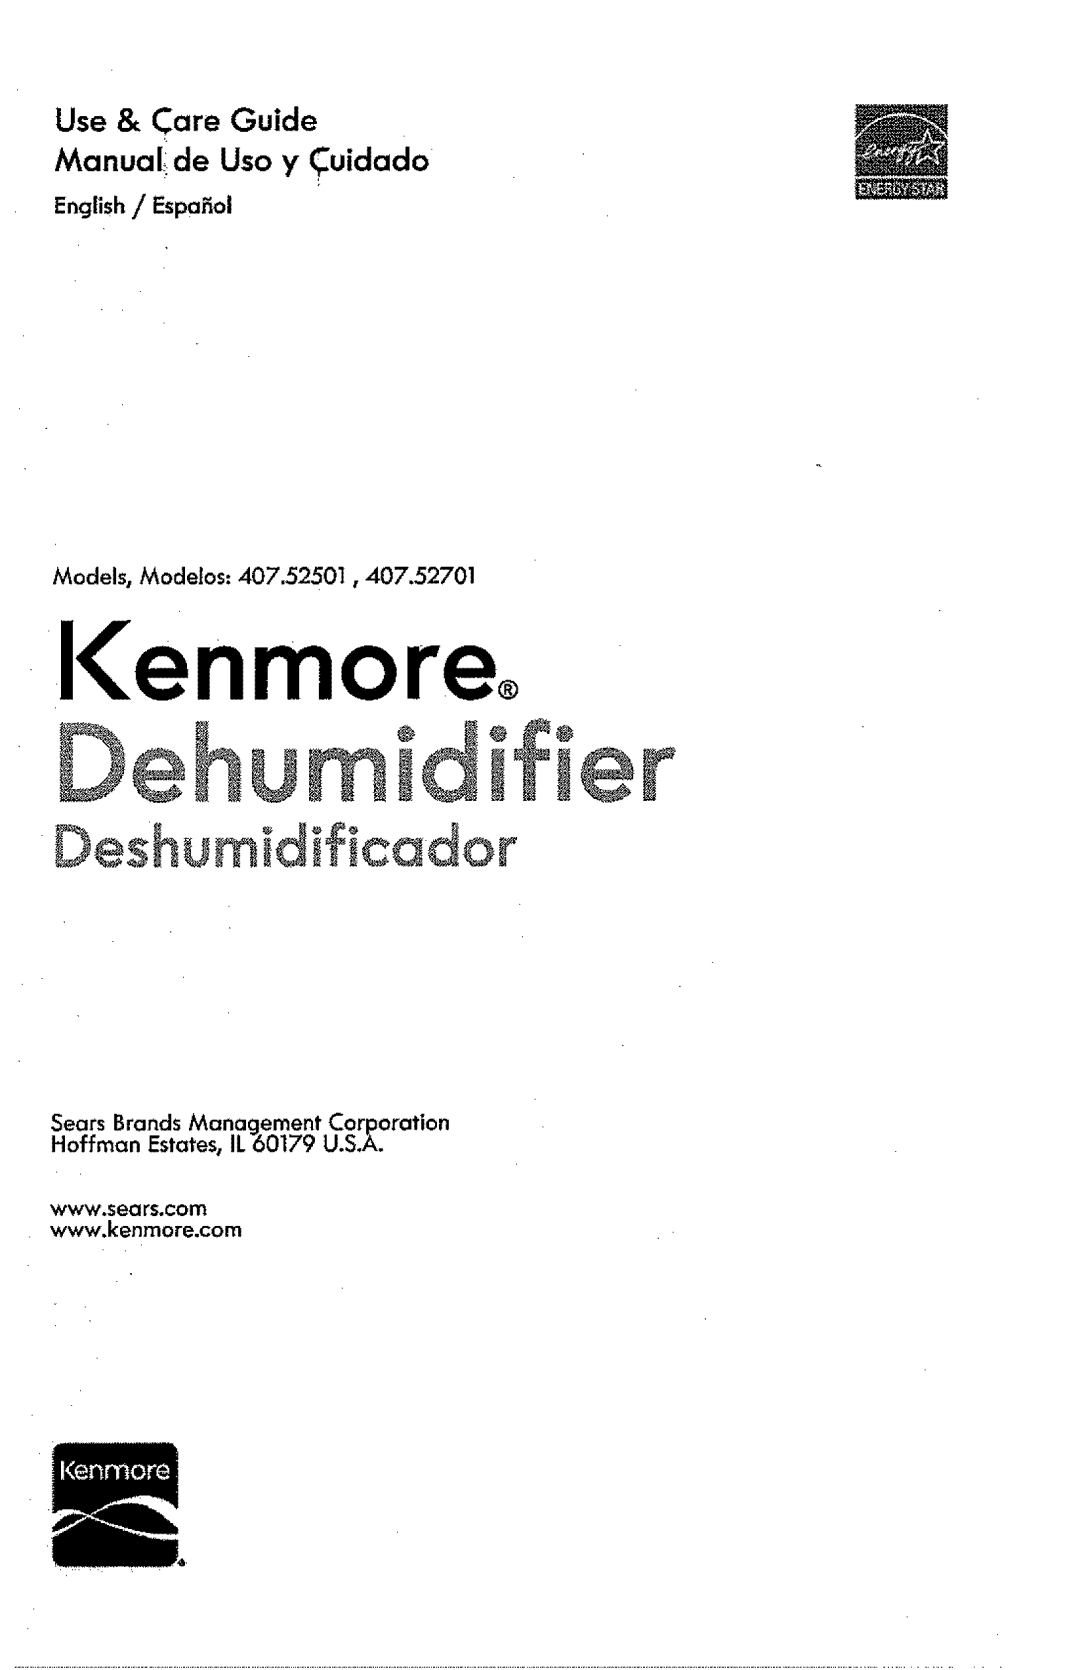 Kenmore 407.52701, 407.52501 manual Use & Care Guide, chum d f er, Ienmore, D÷shumd ficador 